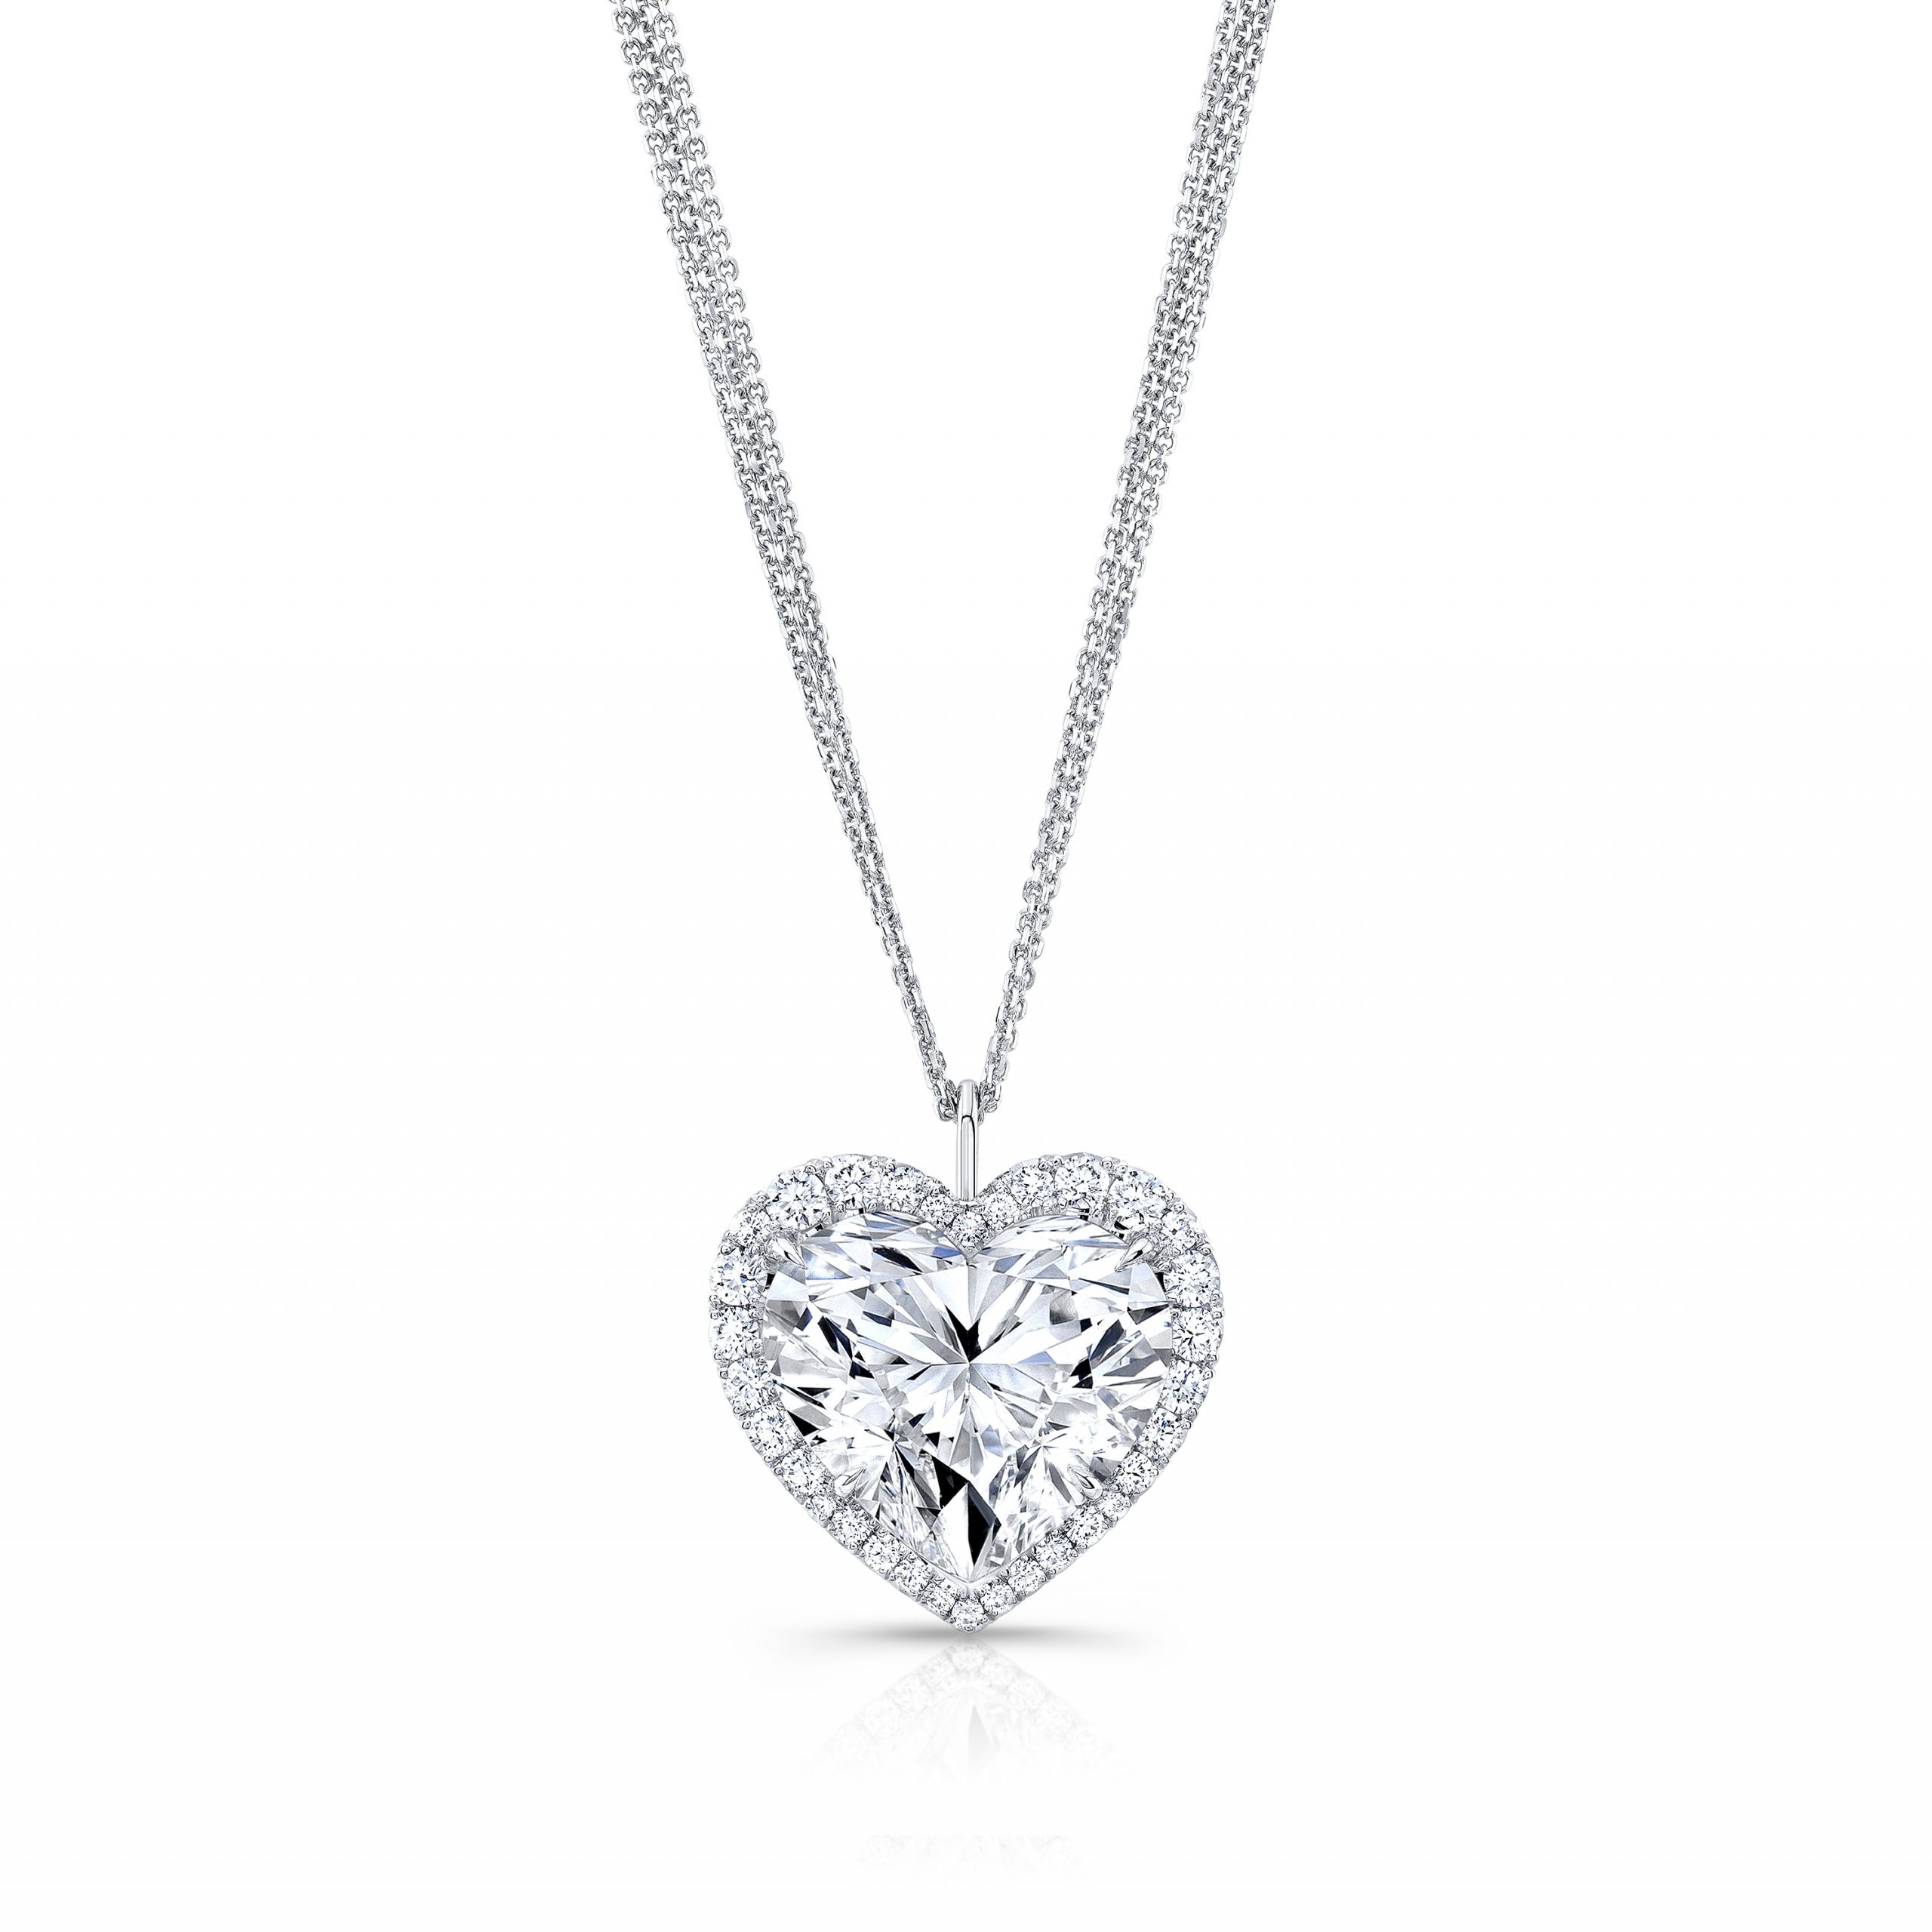 3 Heart Diamond Pendant Necklace 14k Gold